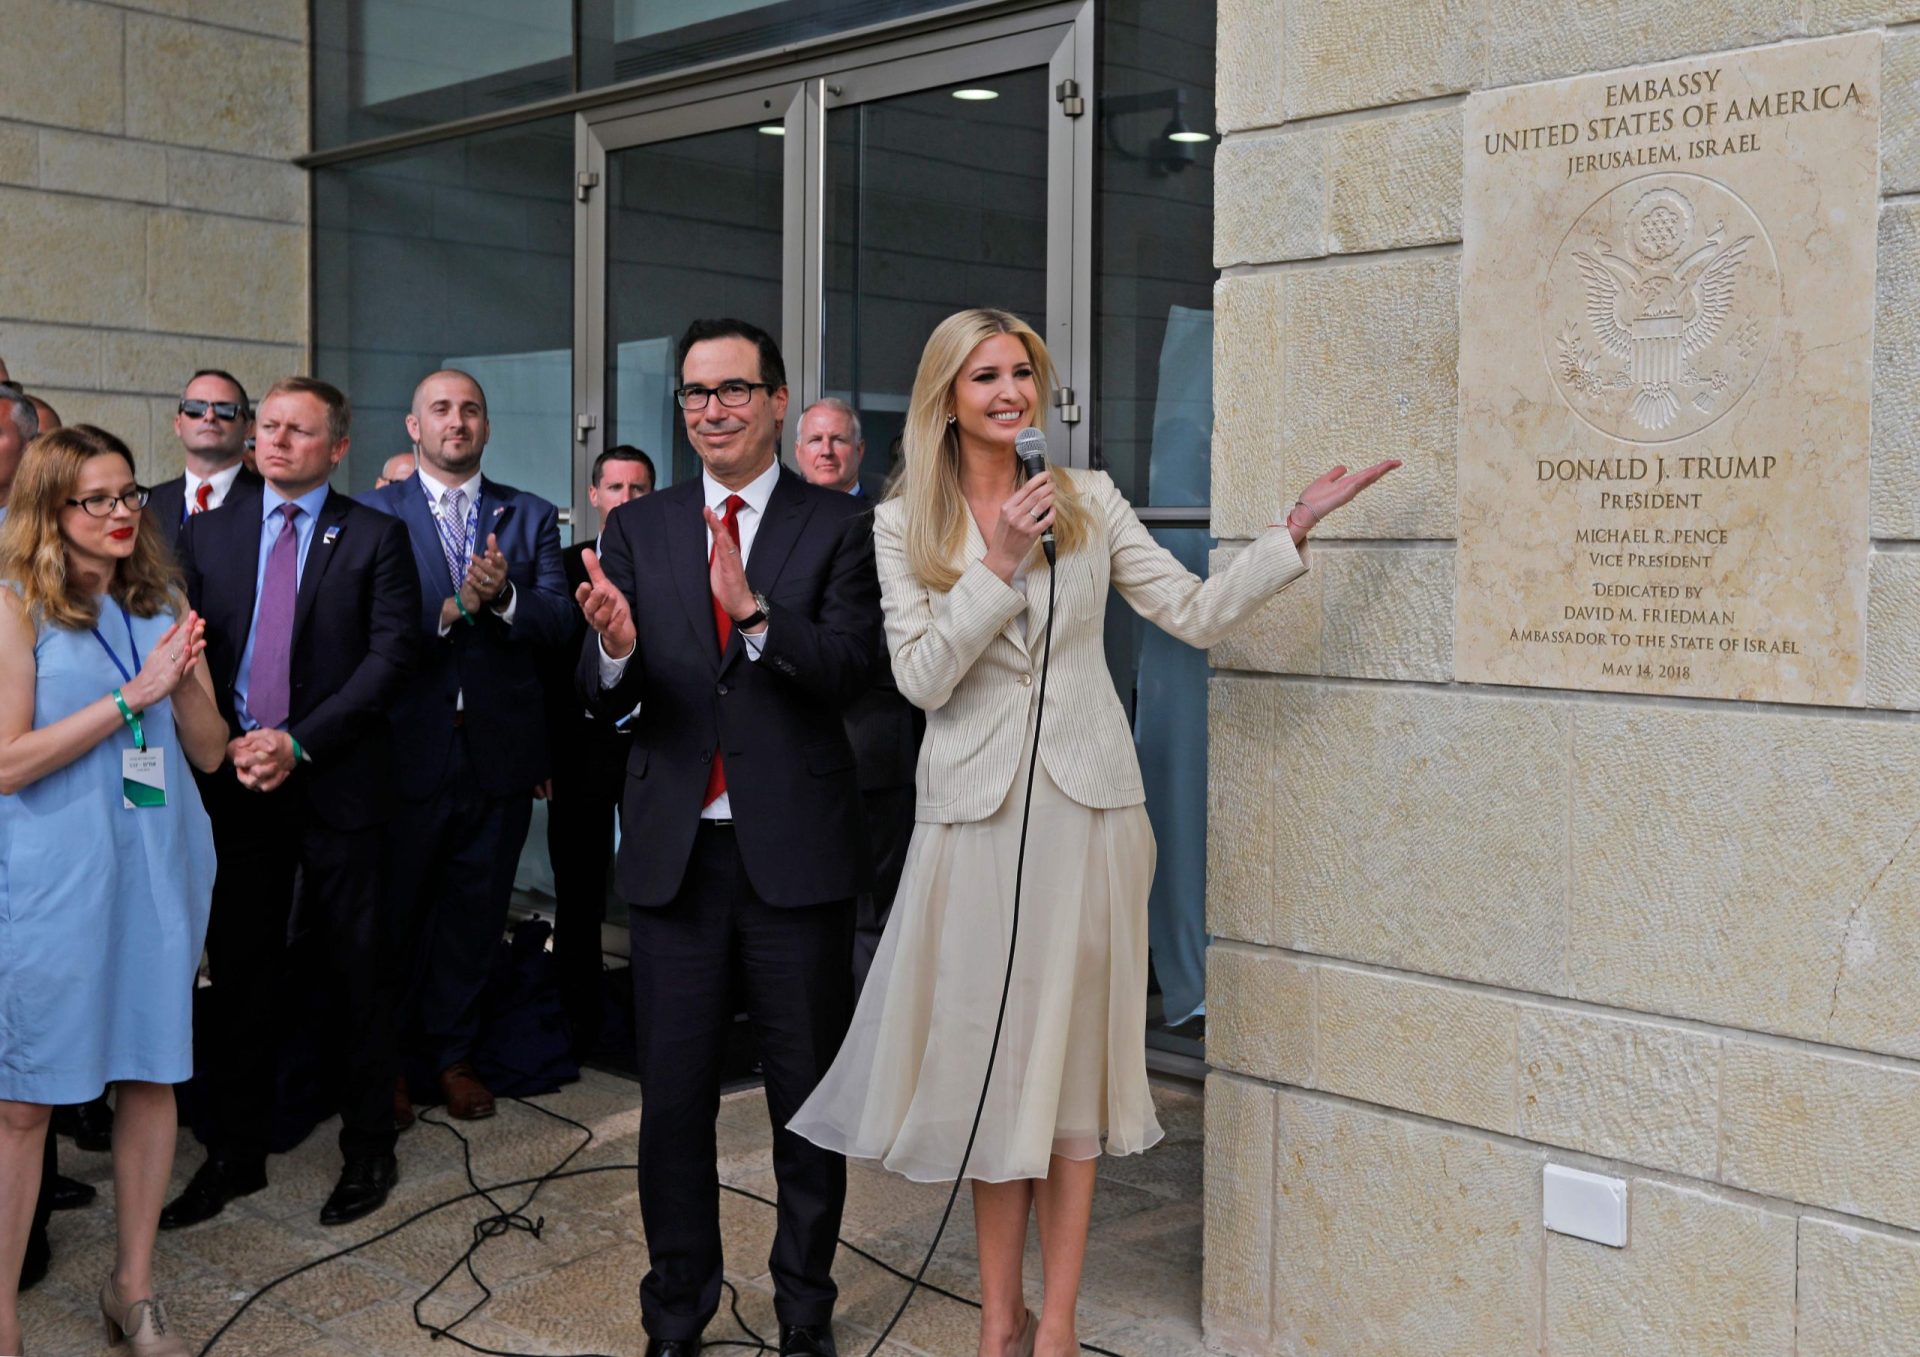 Jerusalém. “Trump, Trump, Trump”, gritou-se na nova embaixada